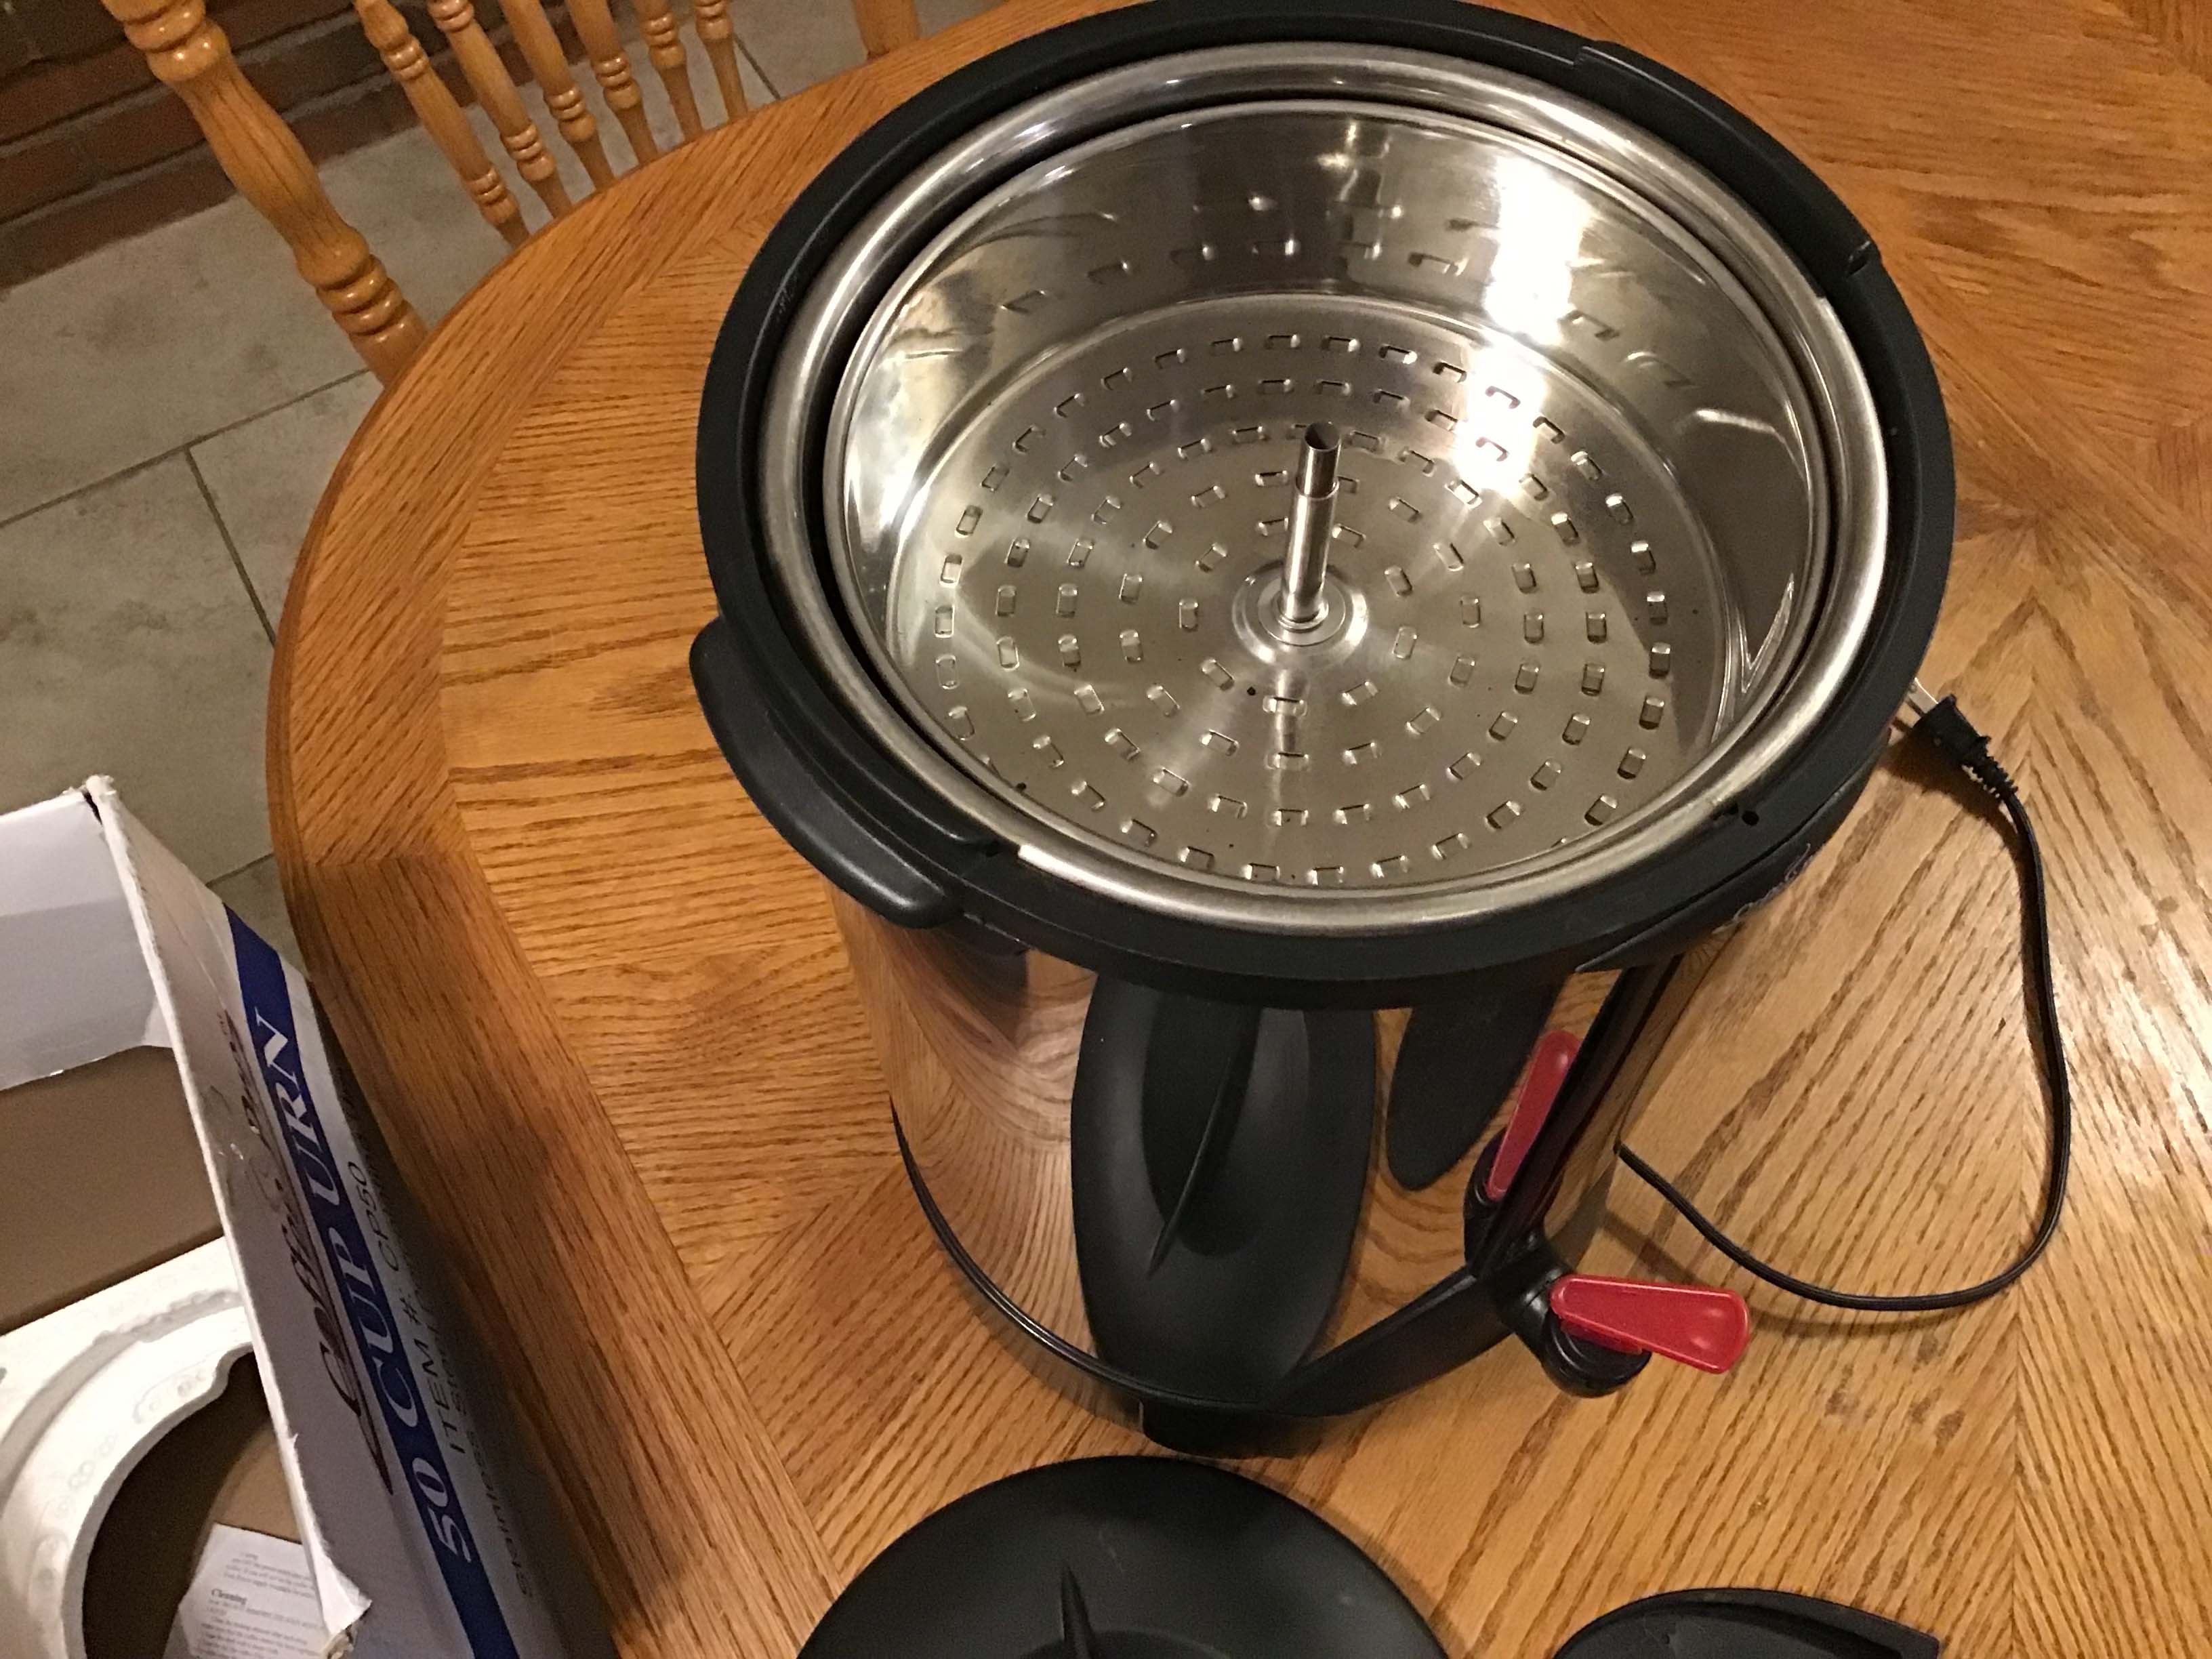 50-cup steel percolating coffee urn